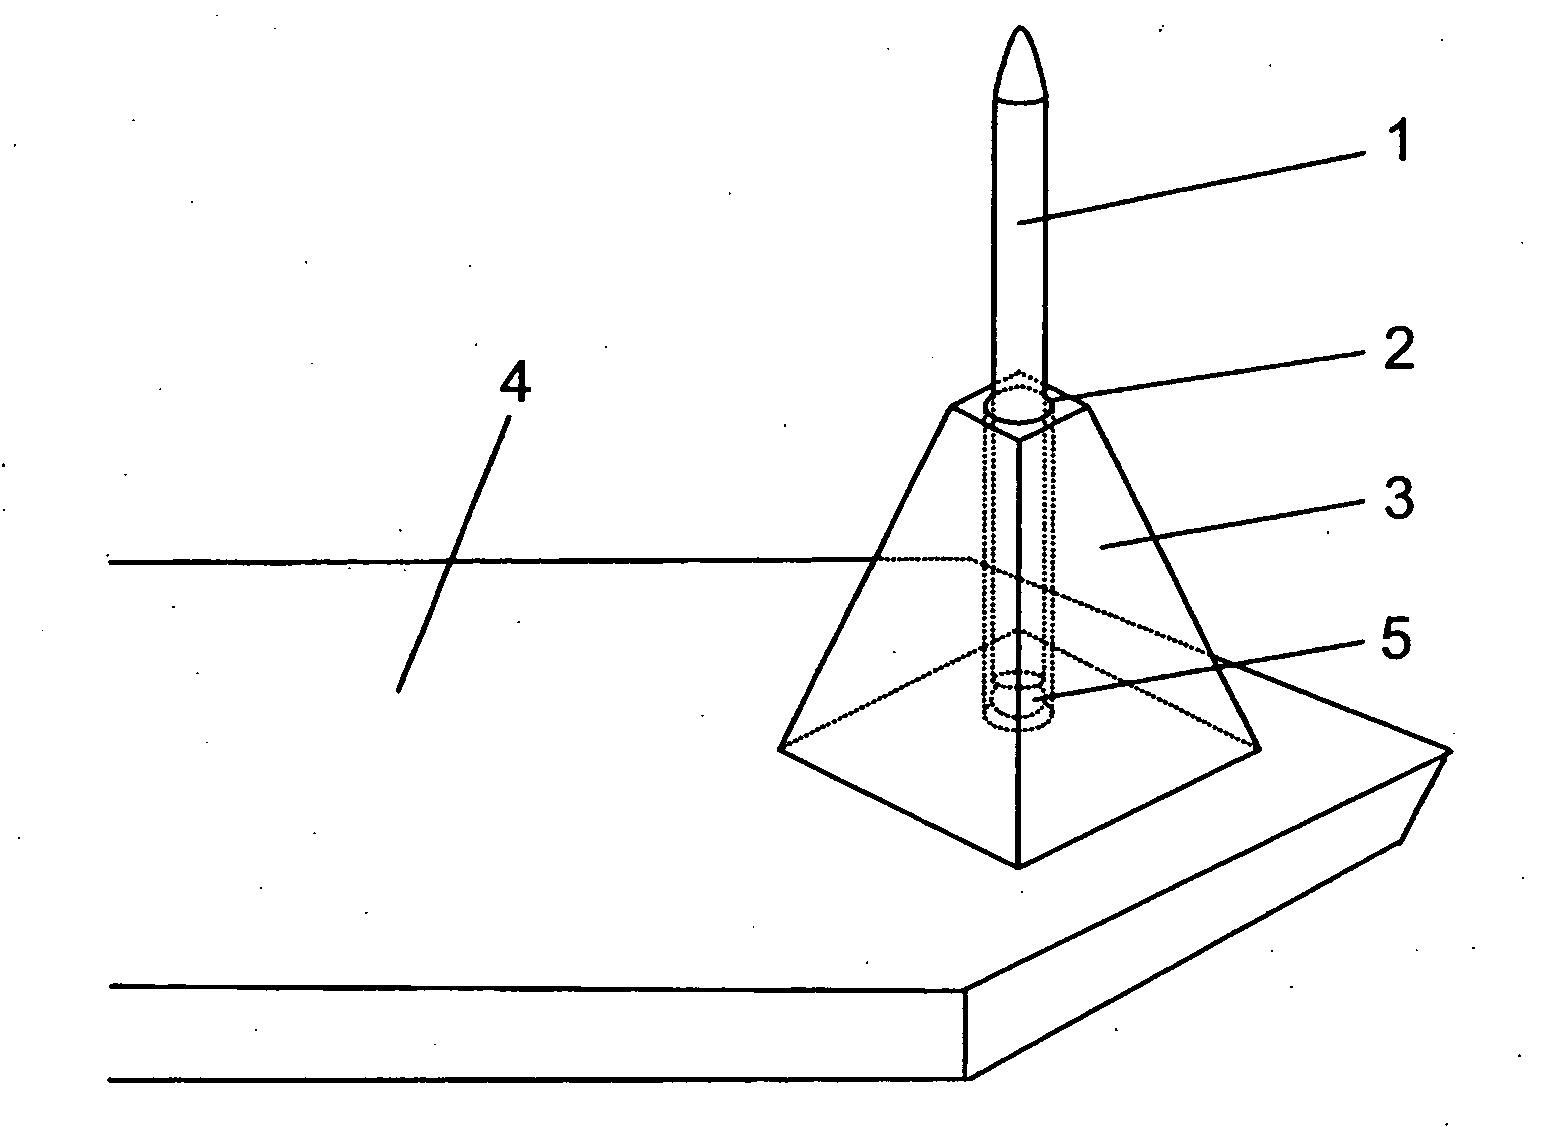 Micro-protruding structure